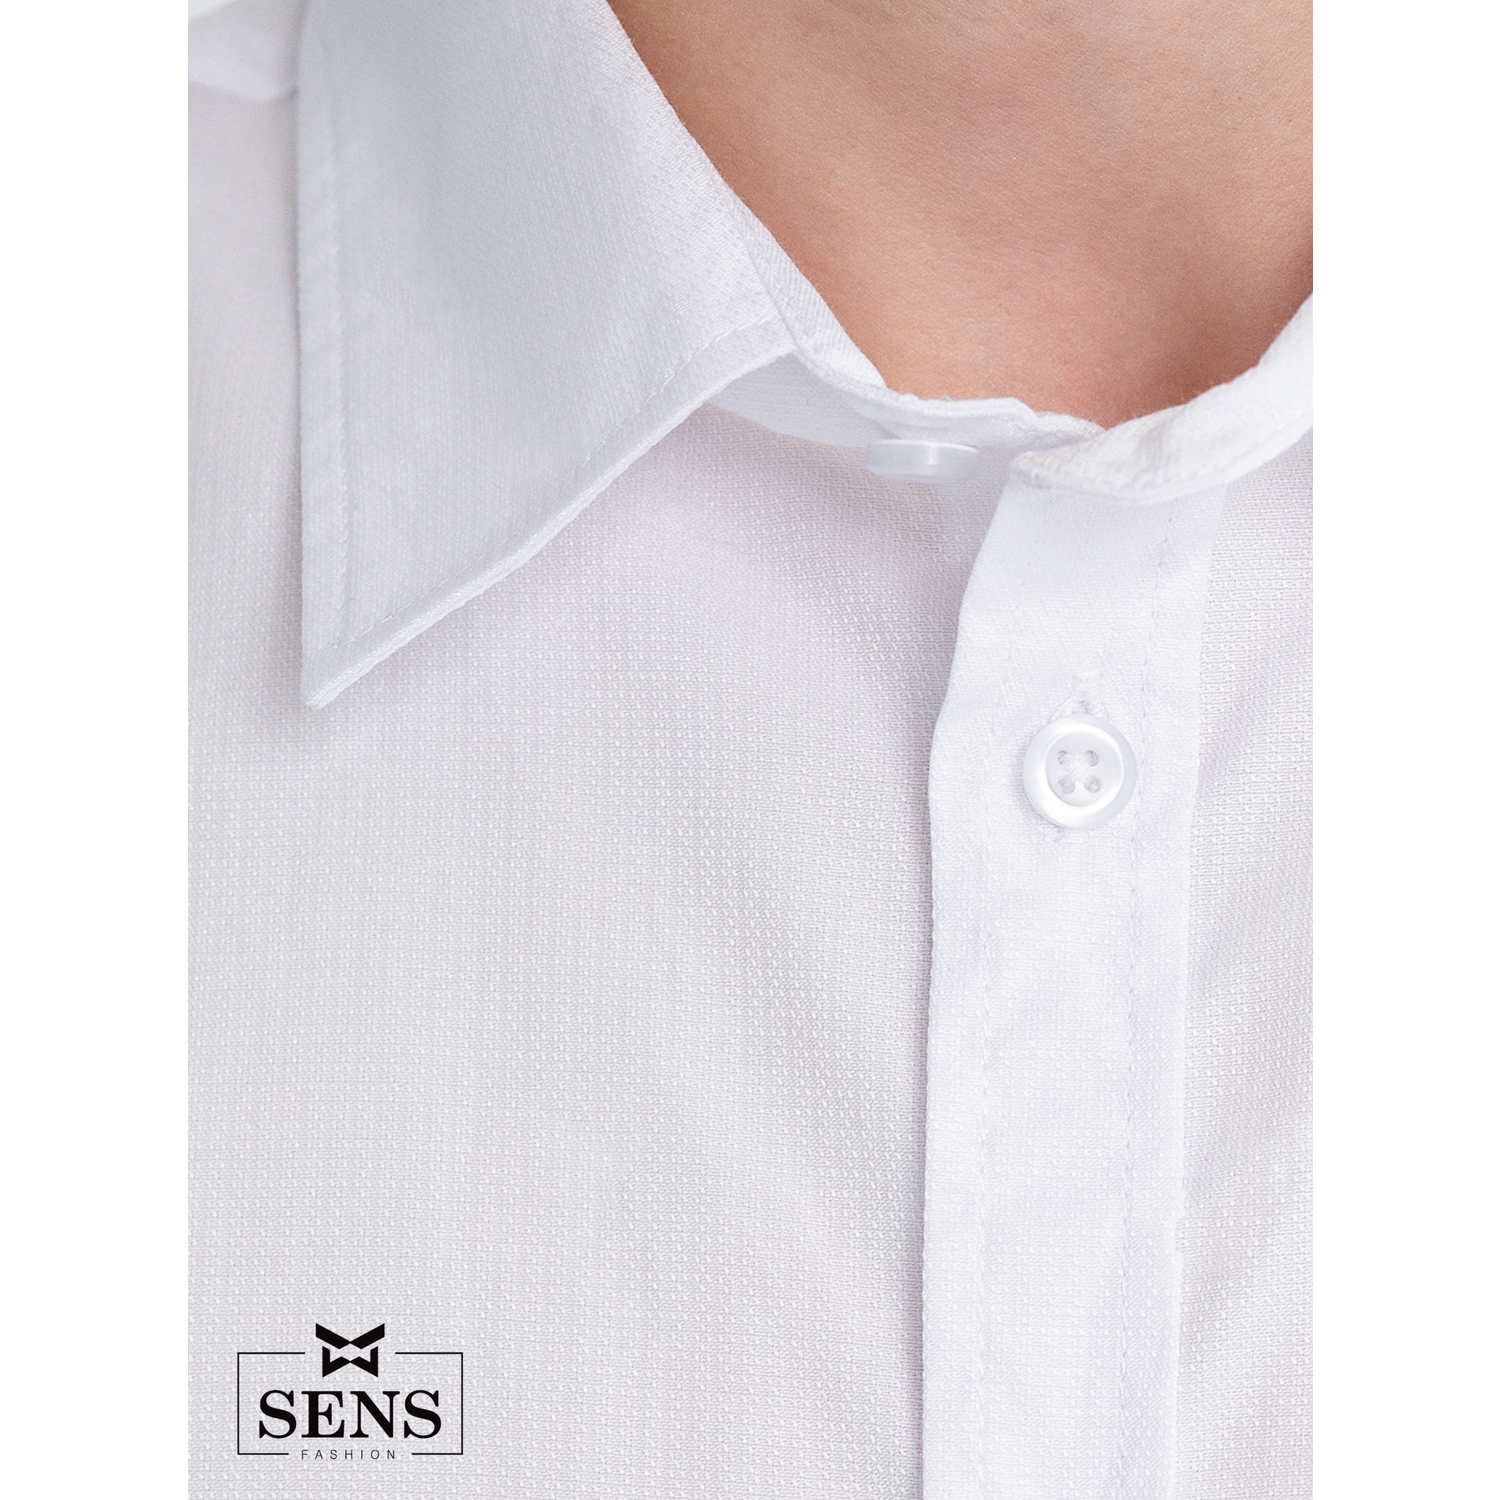 Рубашка Sens Fashion РМП/белый - фото 3